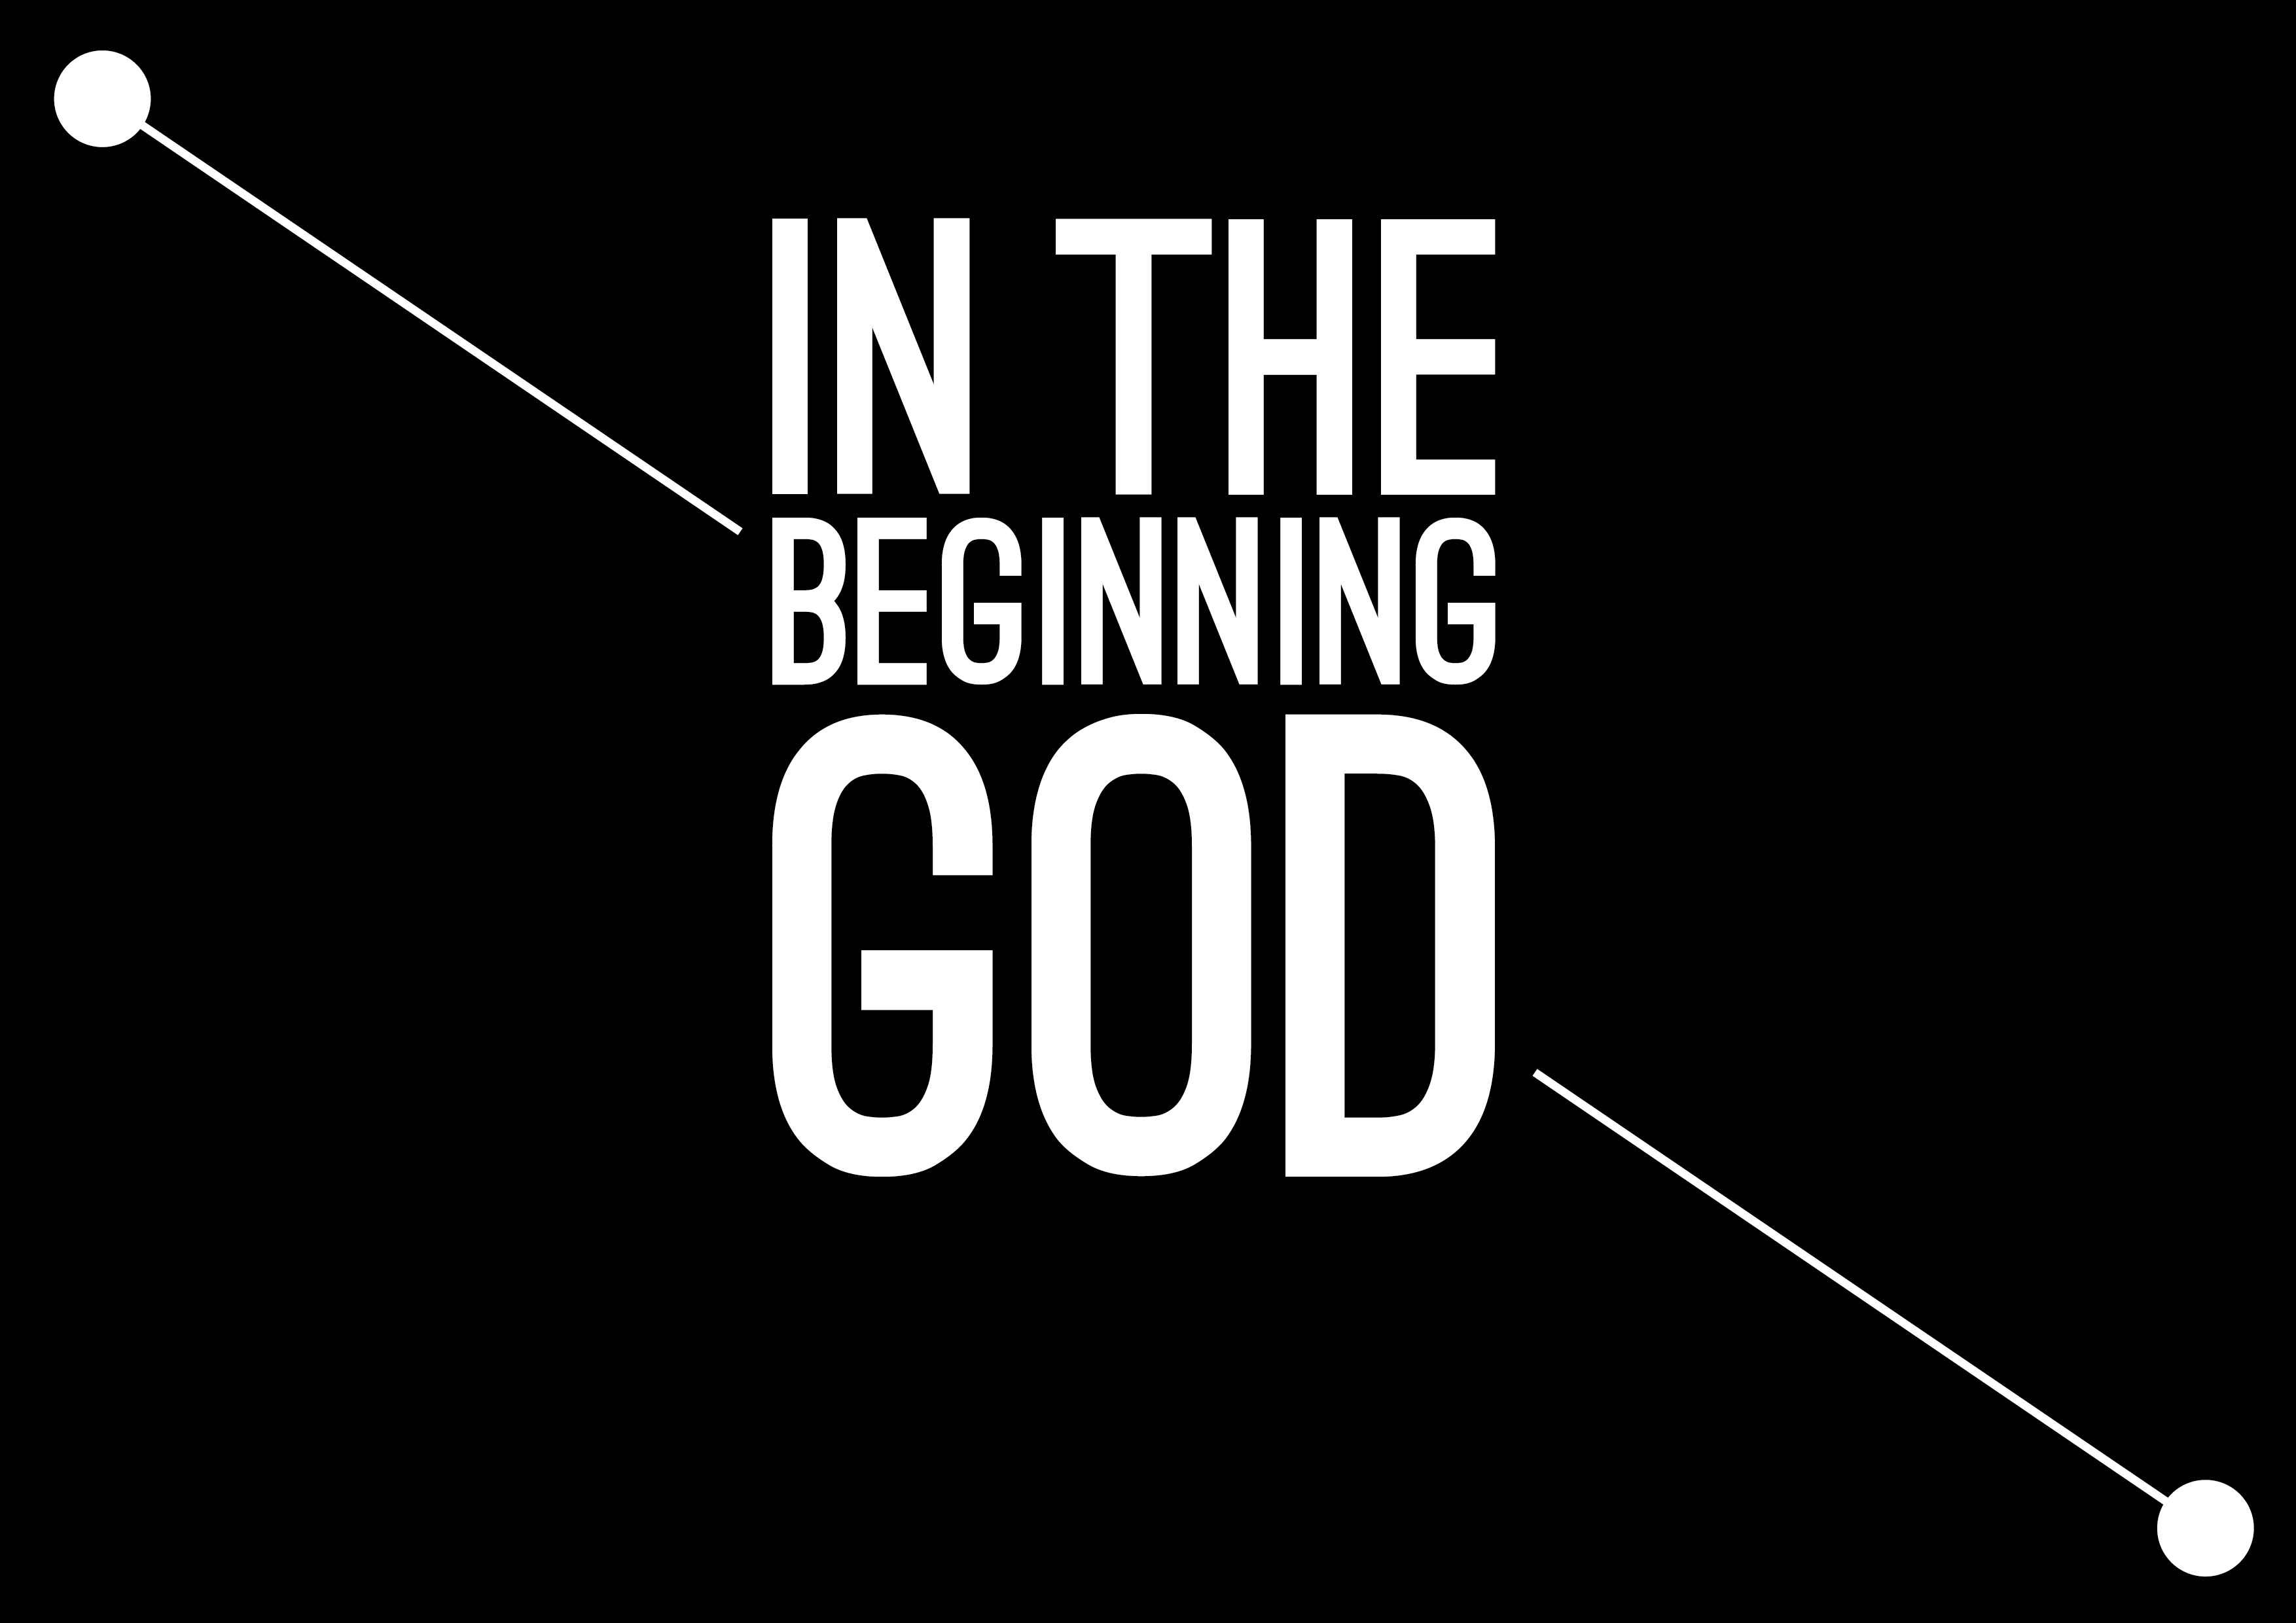 Leeds Vineyard : In the beginning, God - making me